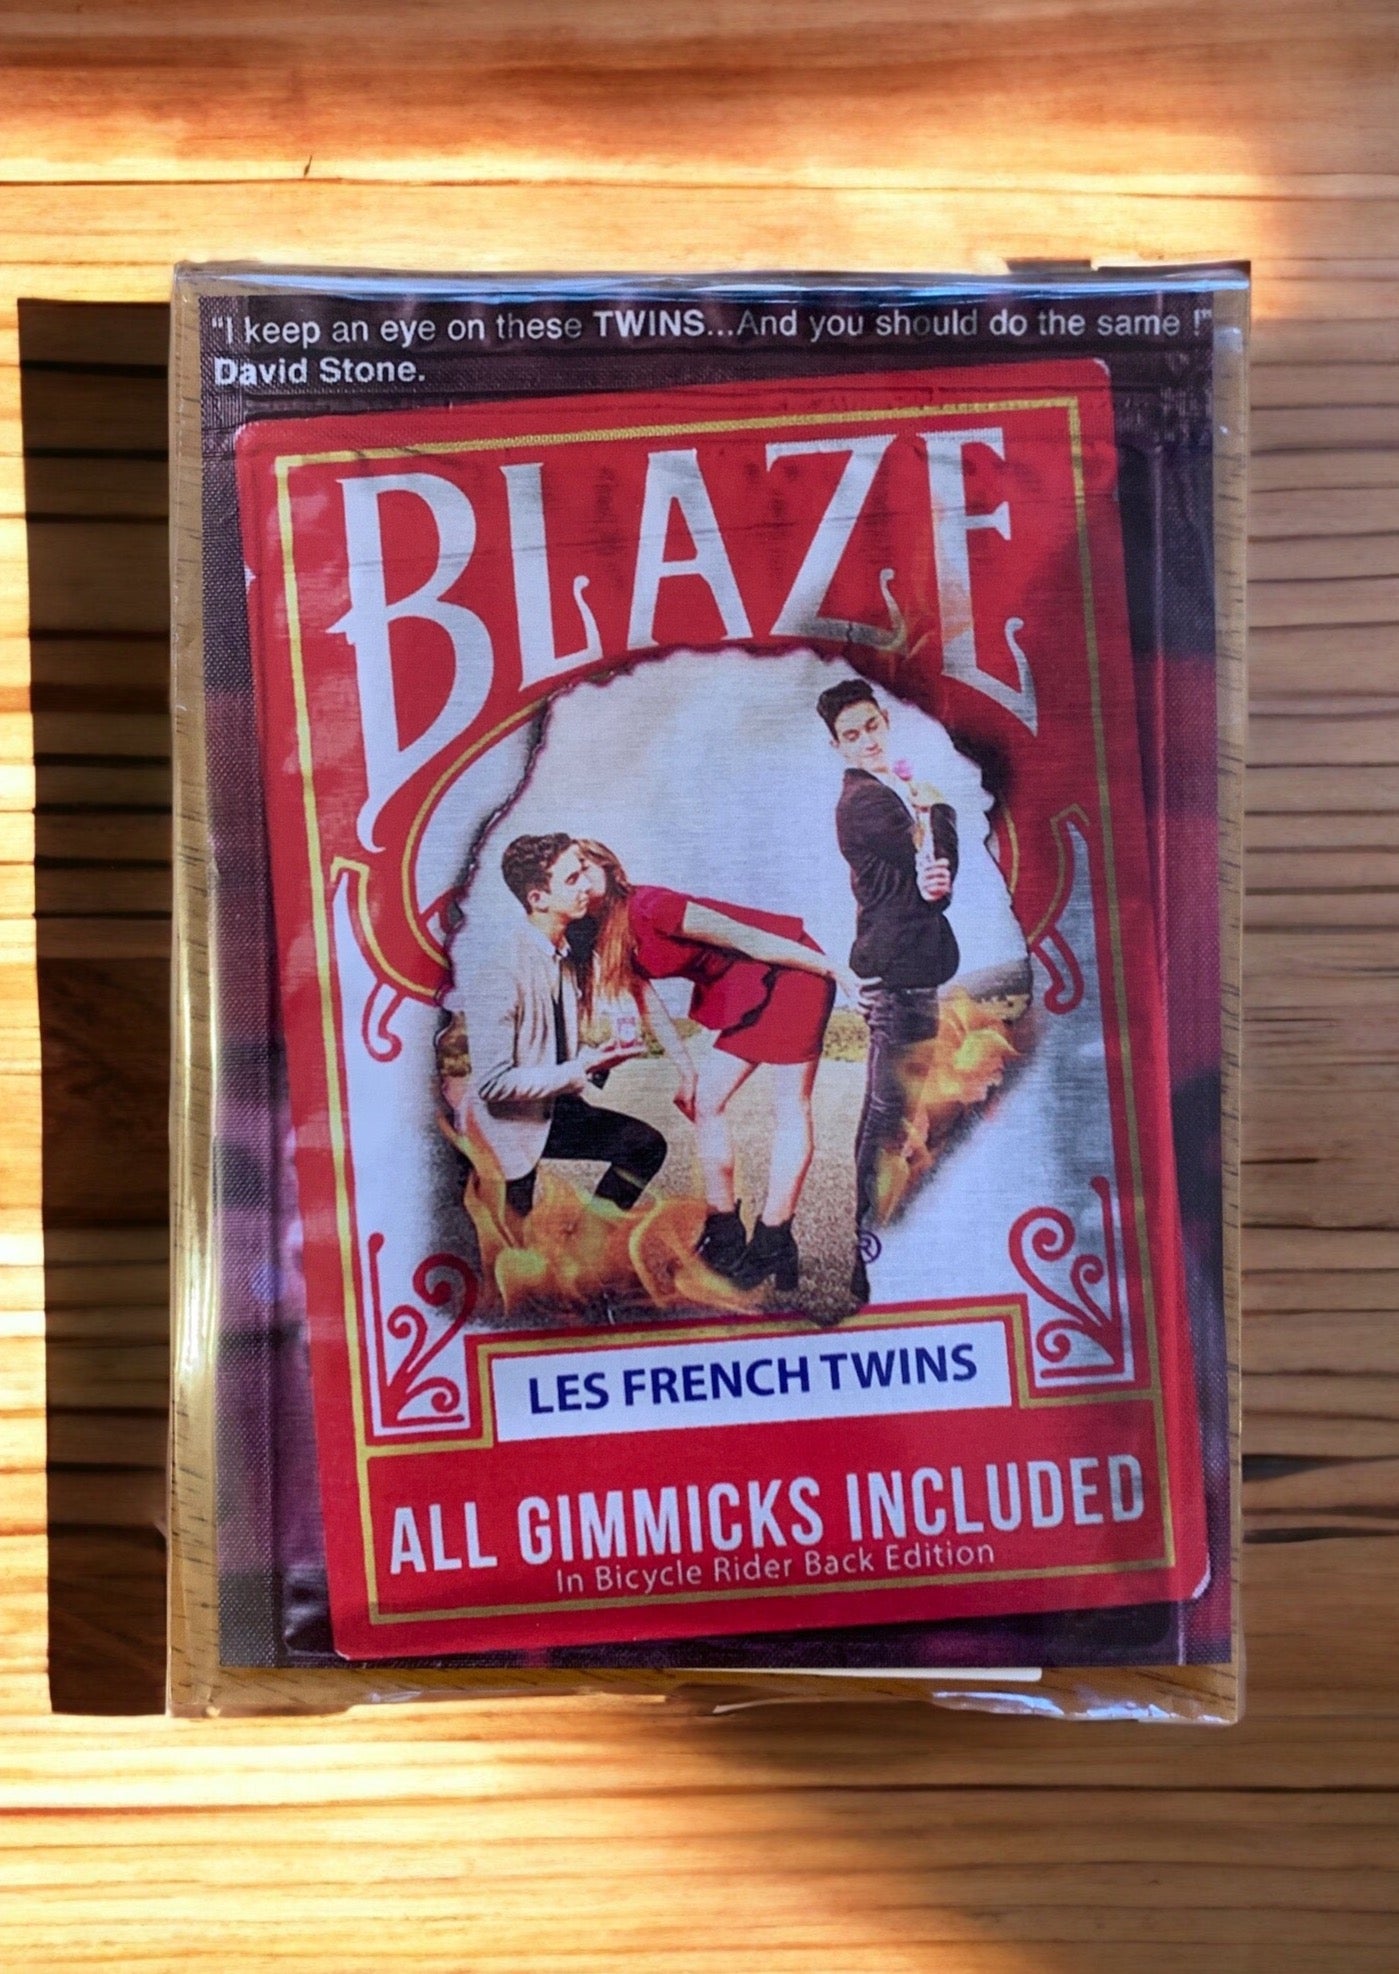 UK MAGIC SHOP BLAZE gimmick & online instructions magic trick cards les French twins